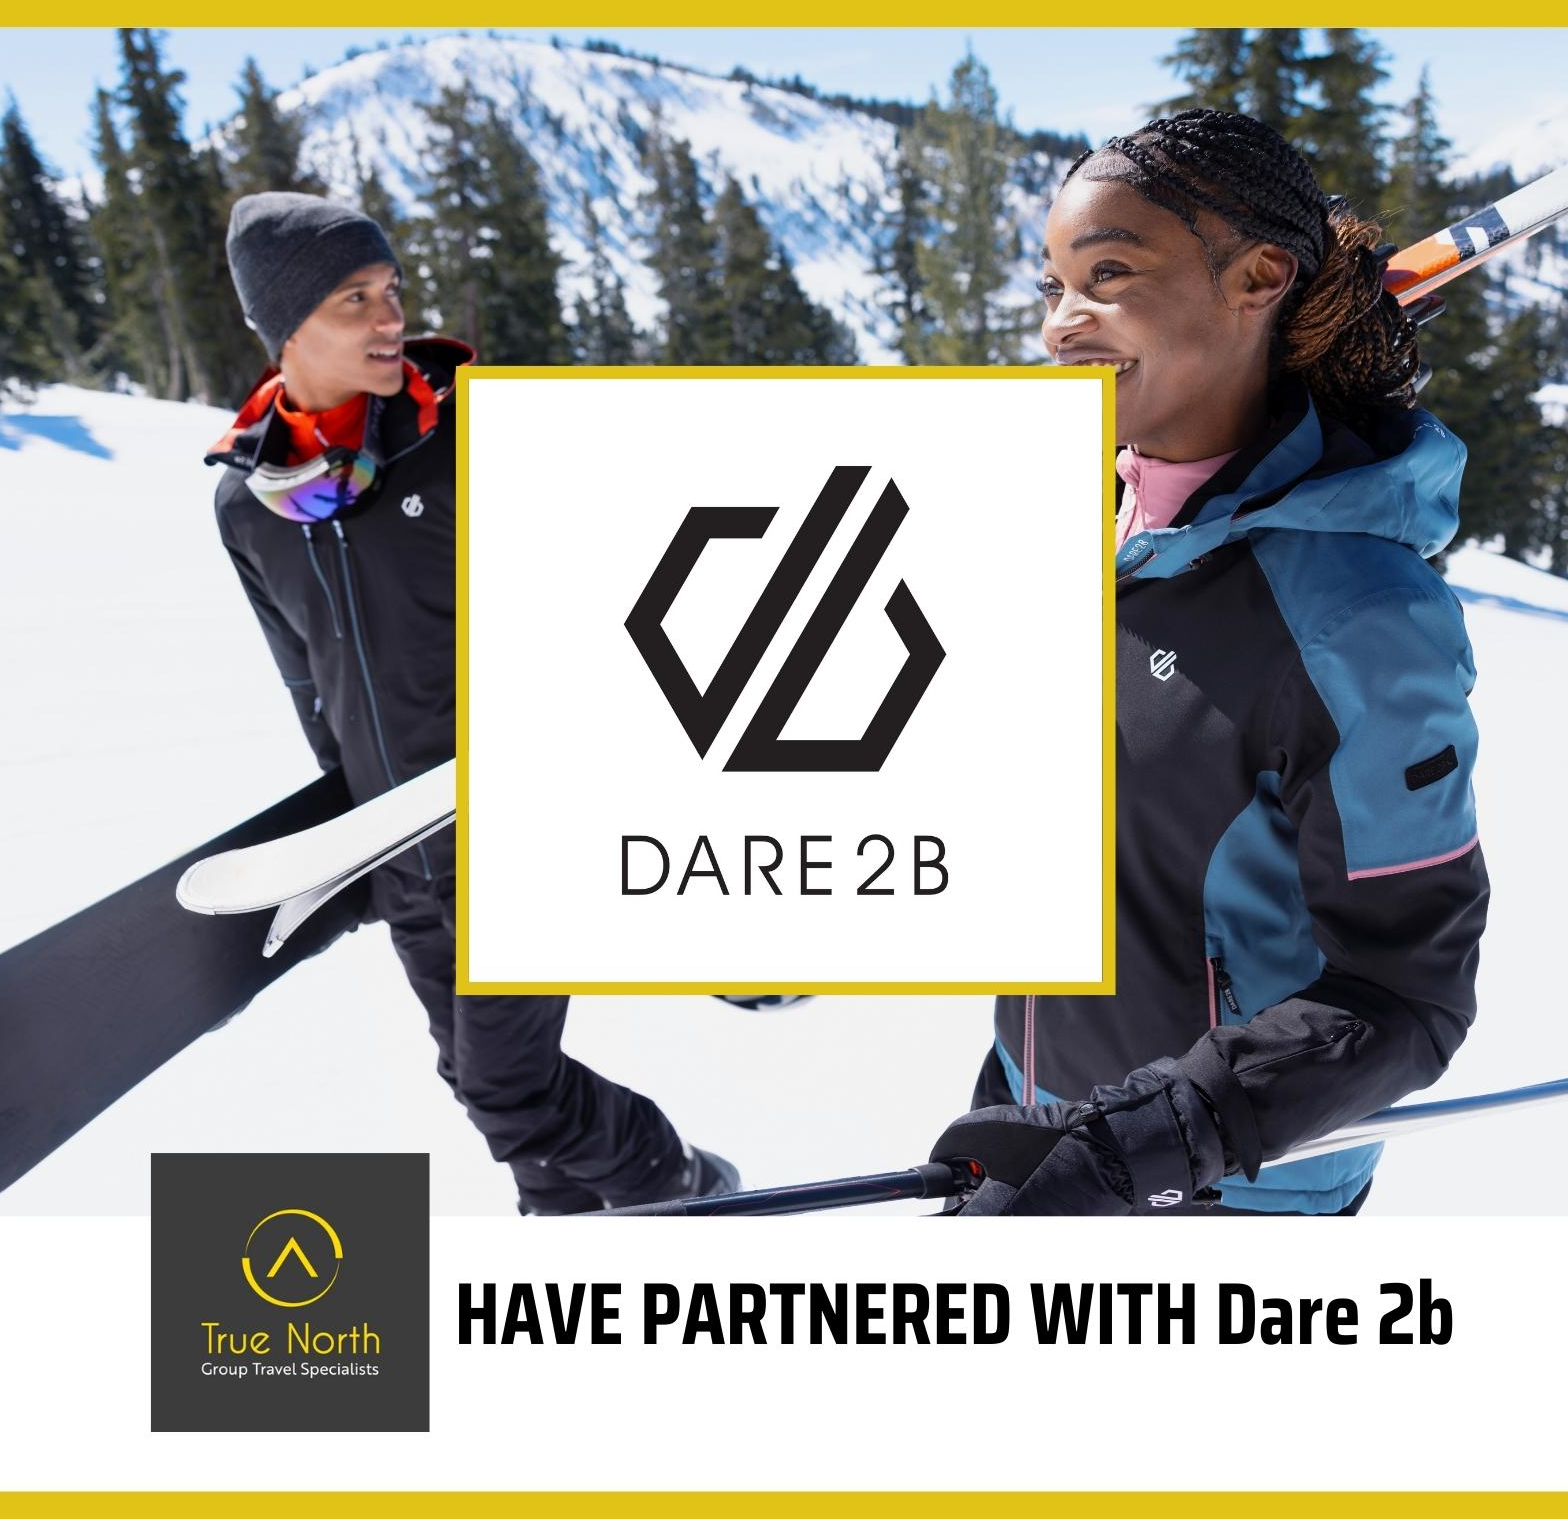 Exclusive Dare2B discounts for the True North community